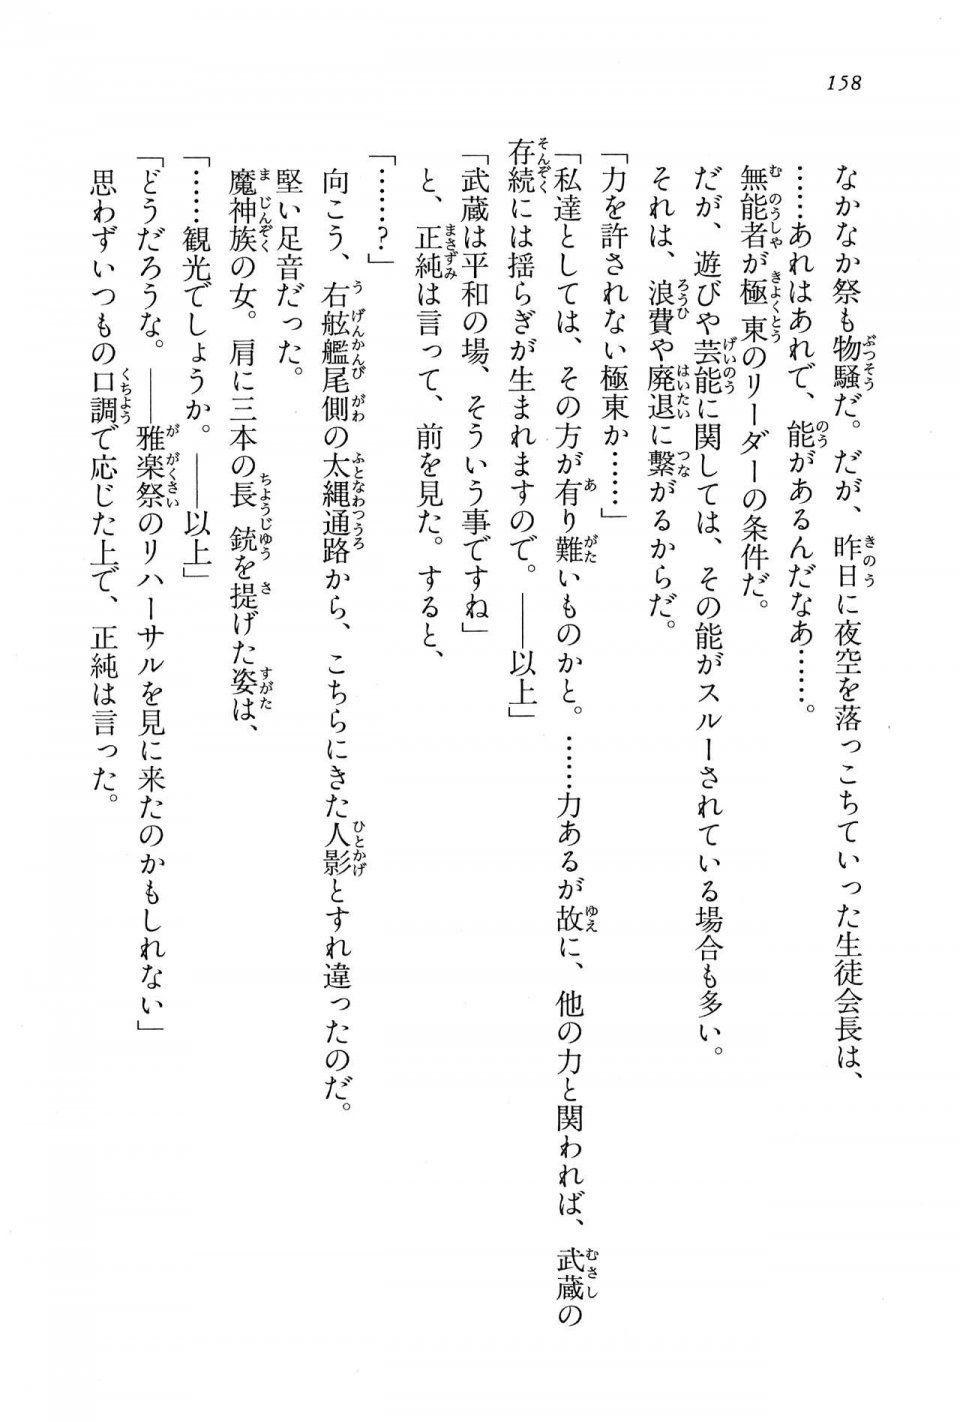 Kyoukai Senjou no Horizon BD Special Mininovel Vol 6(3B) - Photo #162